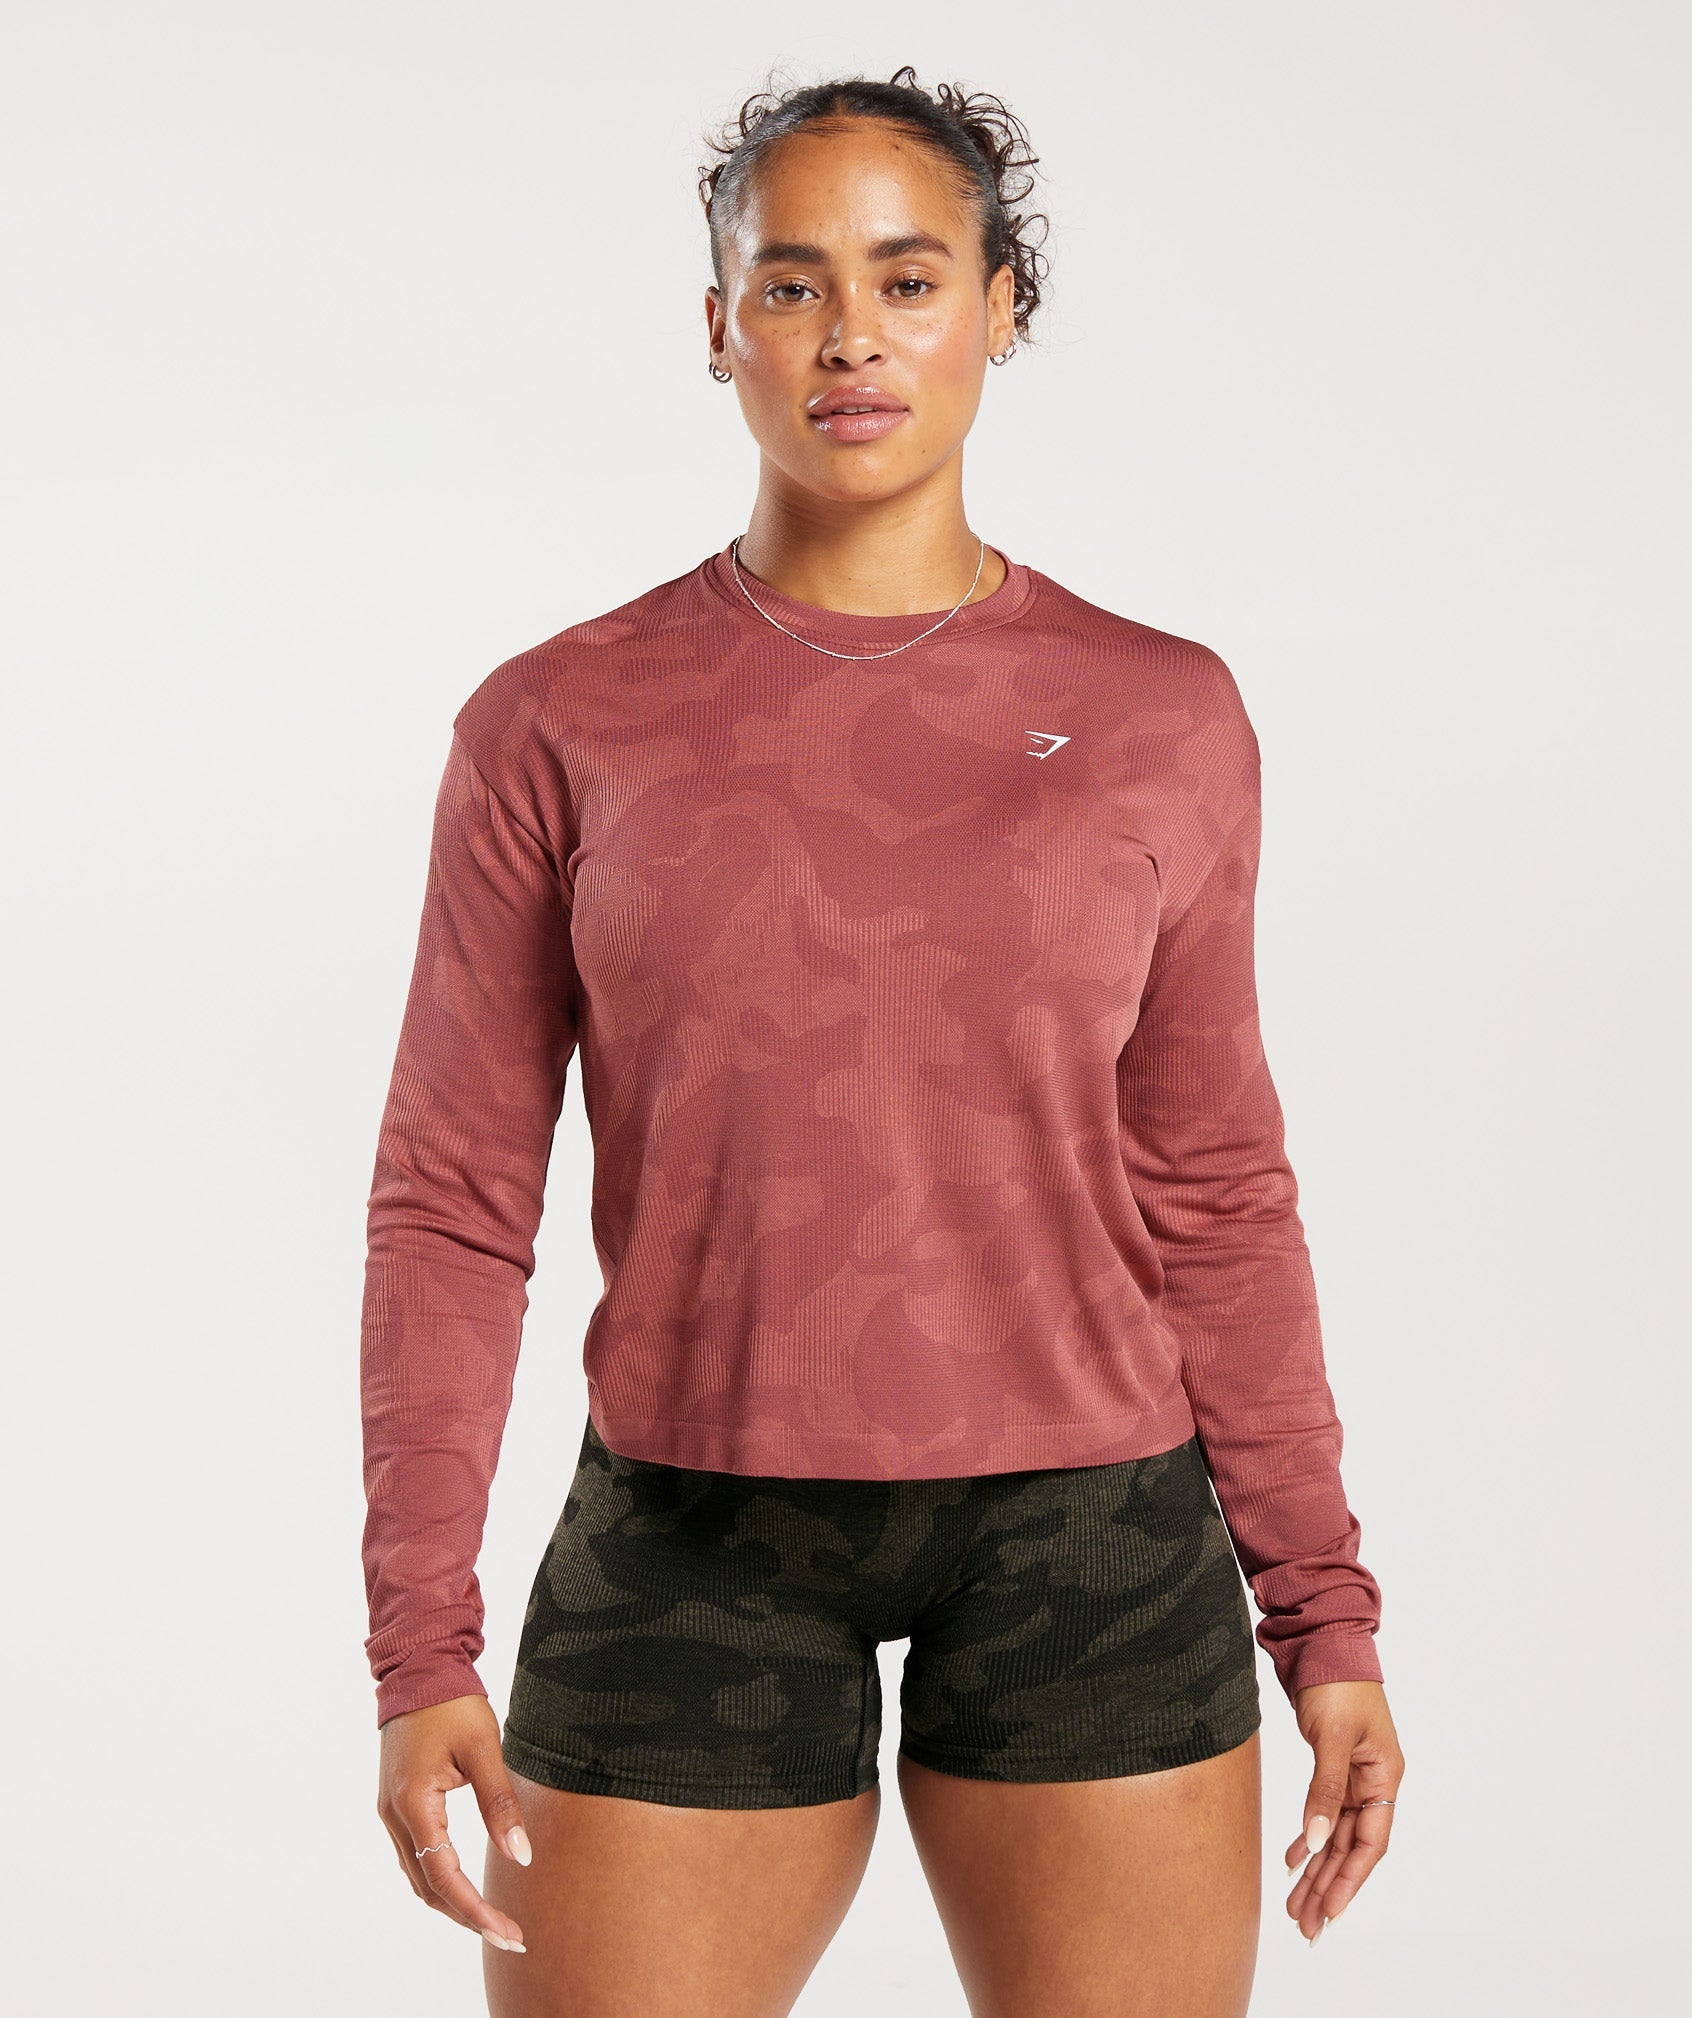 Gymshark Adapt Fleck Seamless Shorts - Plum Brown/Dewberry Purple